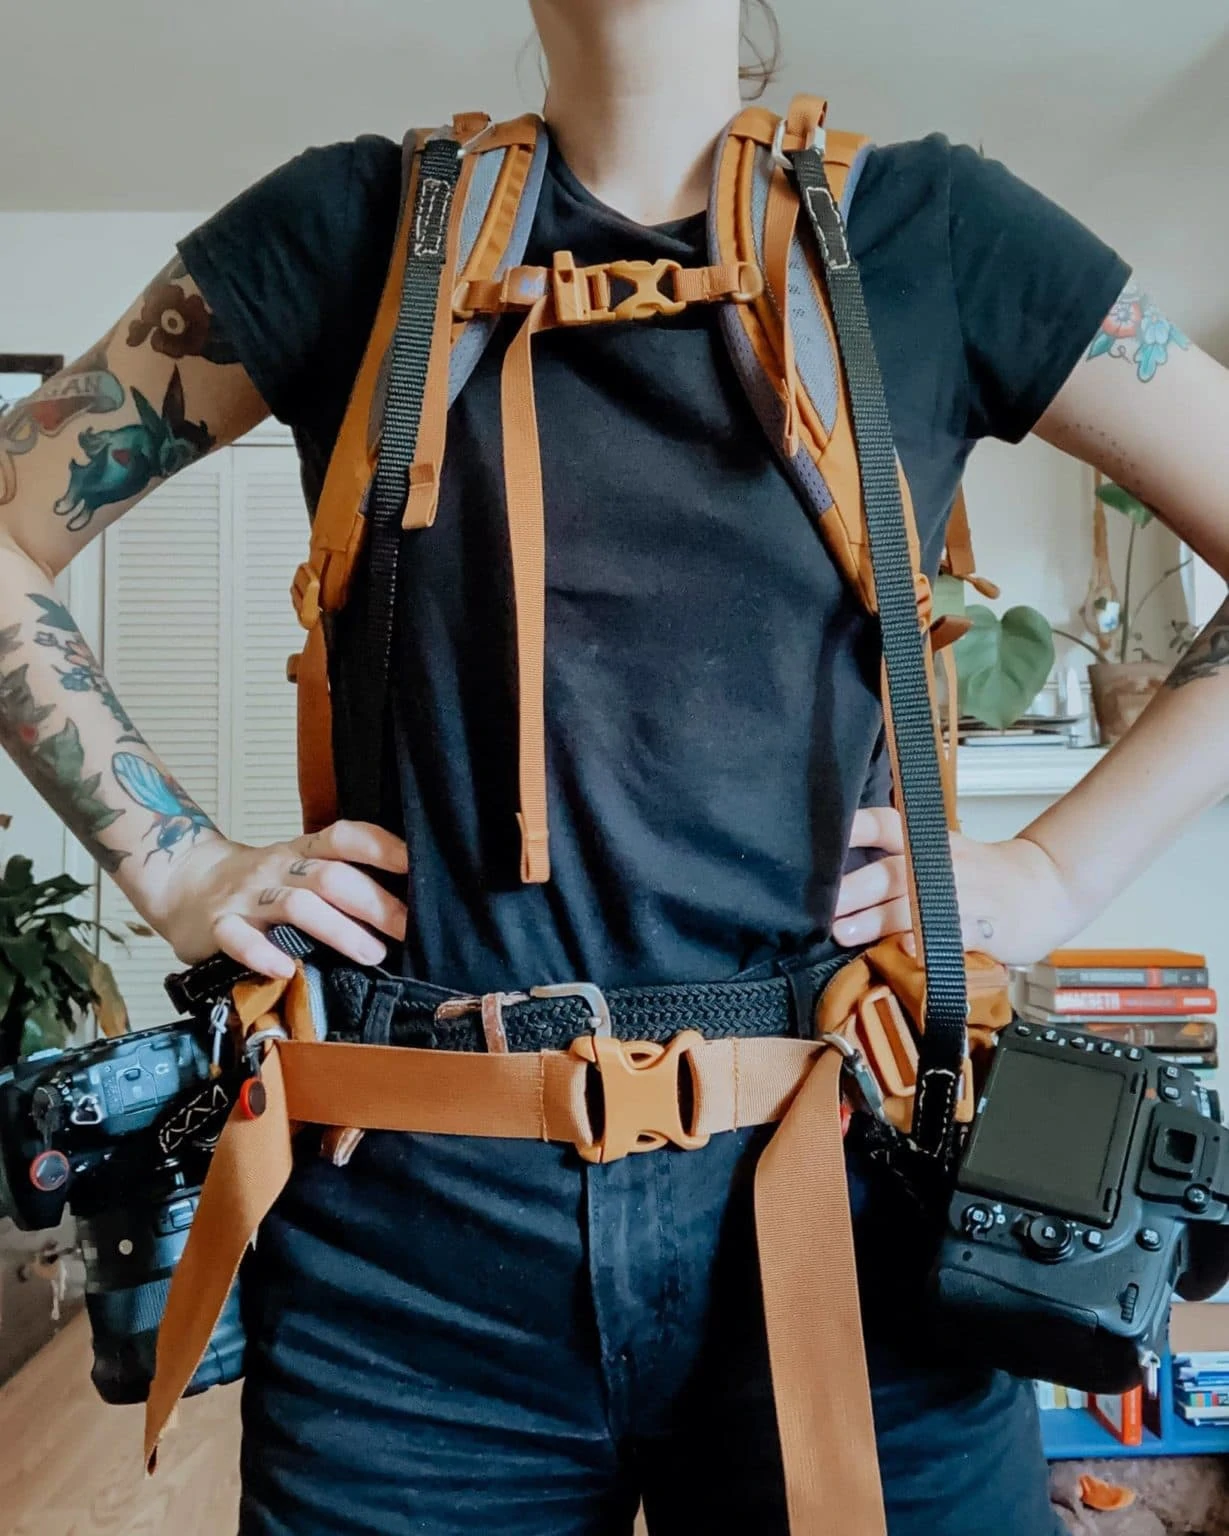 https://flitphotography.com/wp-content/uploads/2020/12/best-dual-camera-hiking-harness-hips-1229x1536.webp